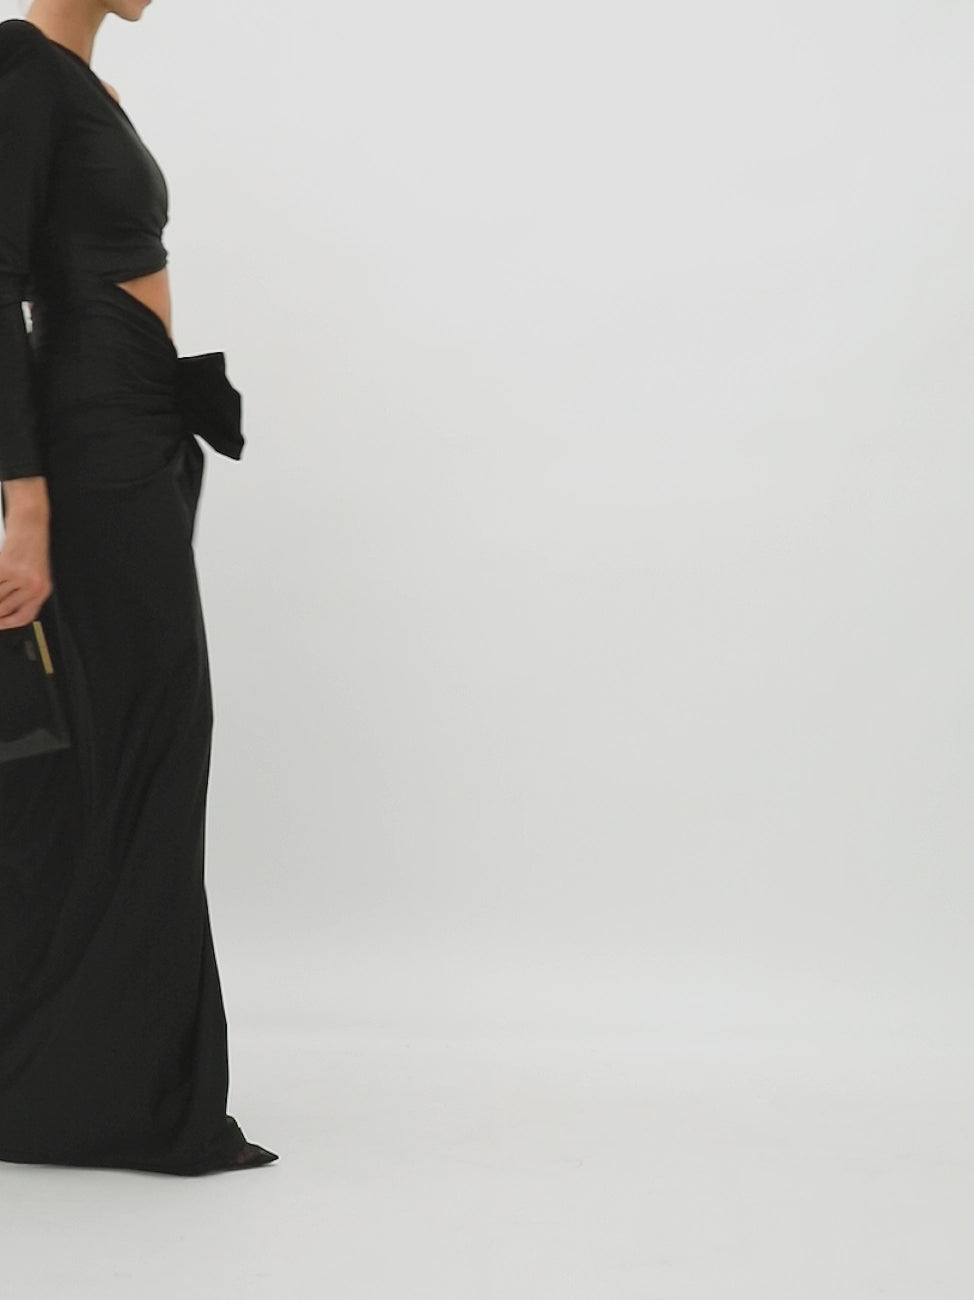 LEESOZ BLACK LONG DRESS